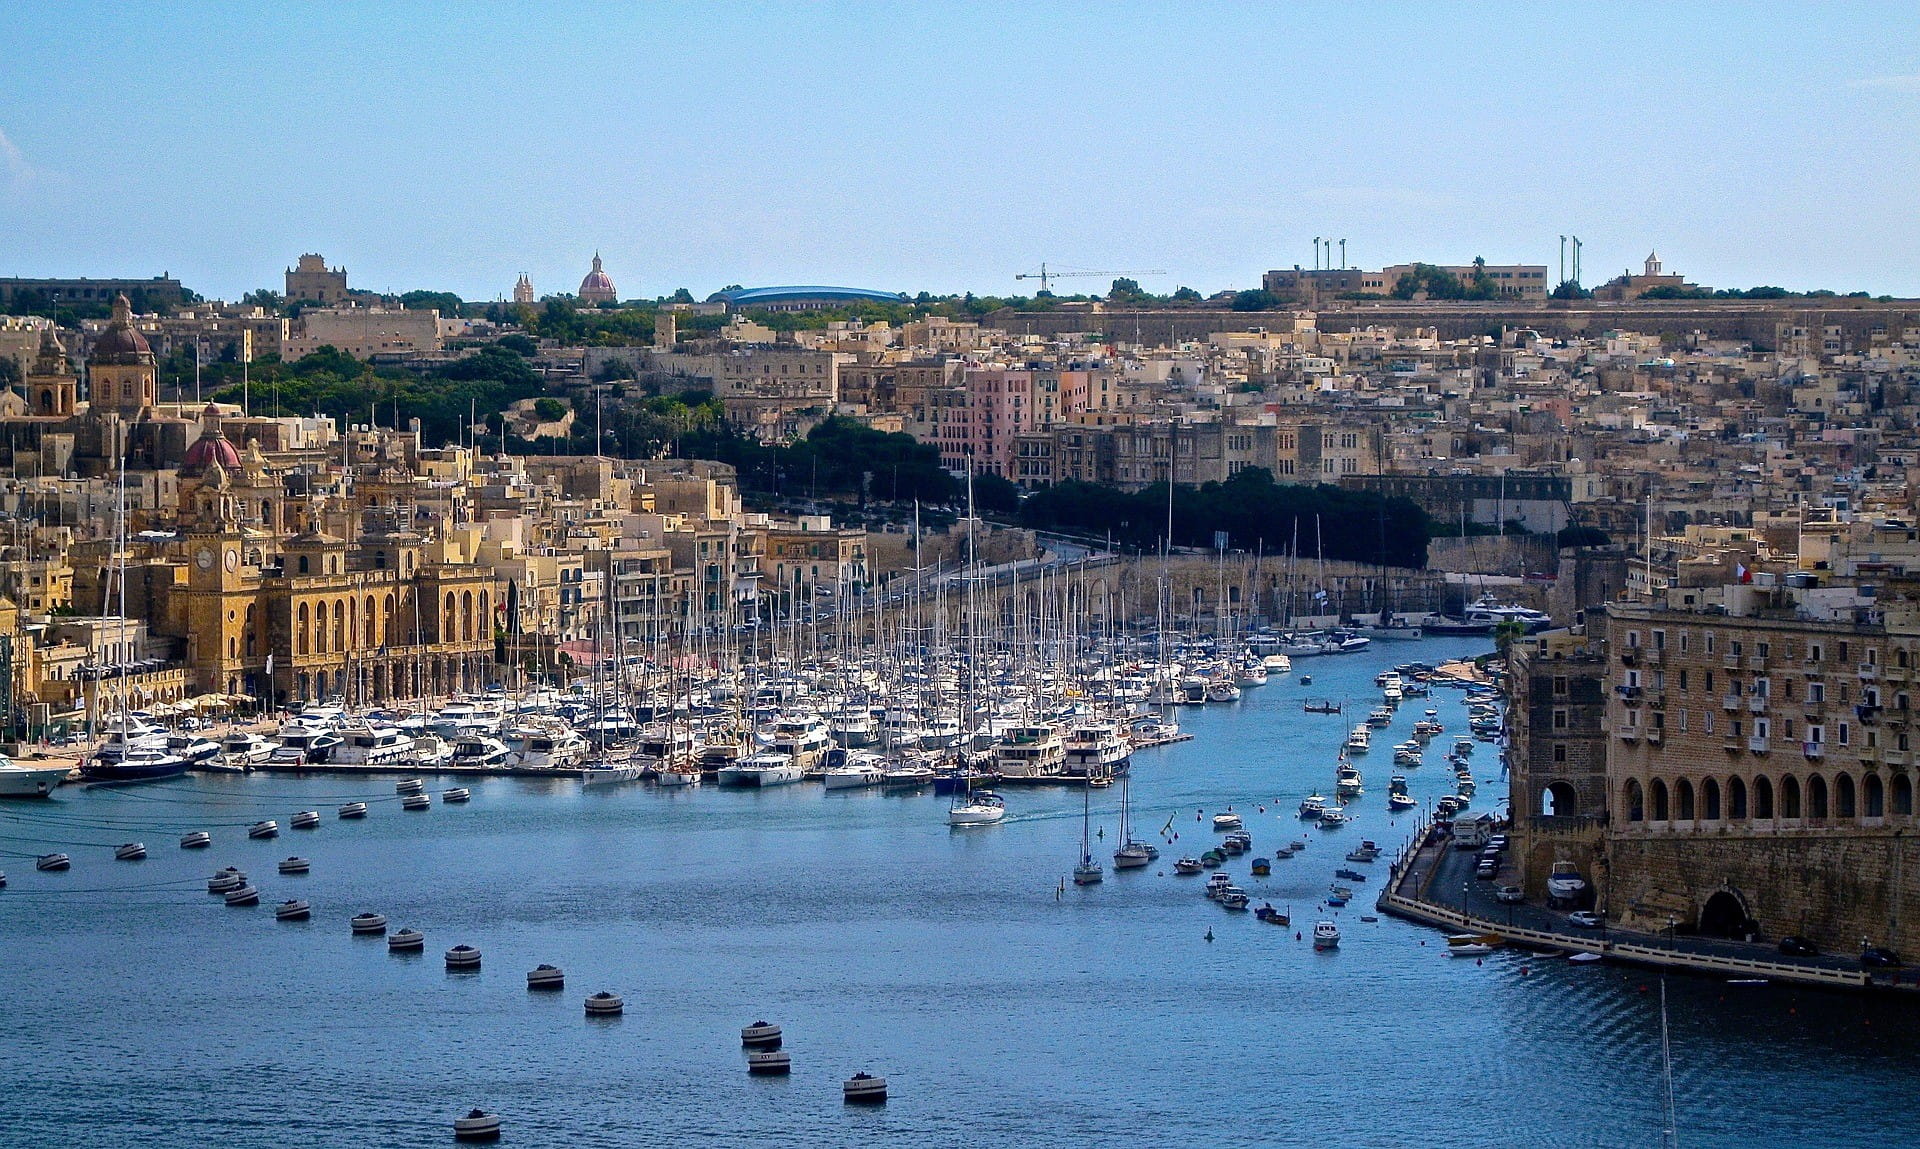 Kota pesisir di Malta dengan marina besar.